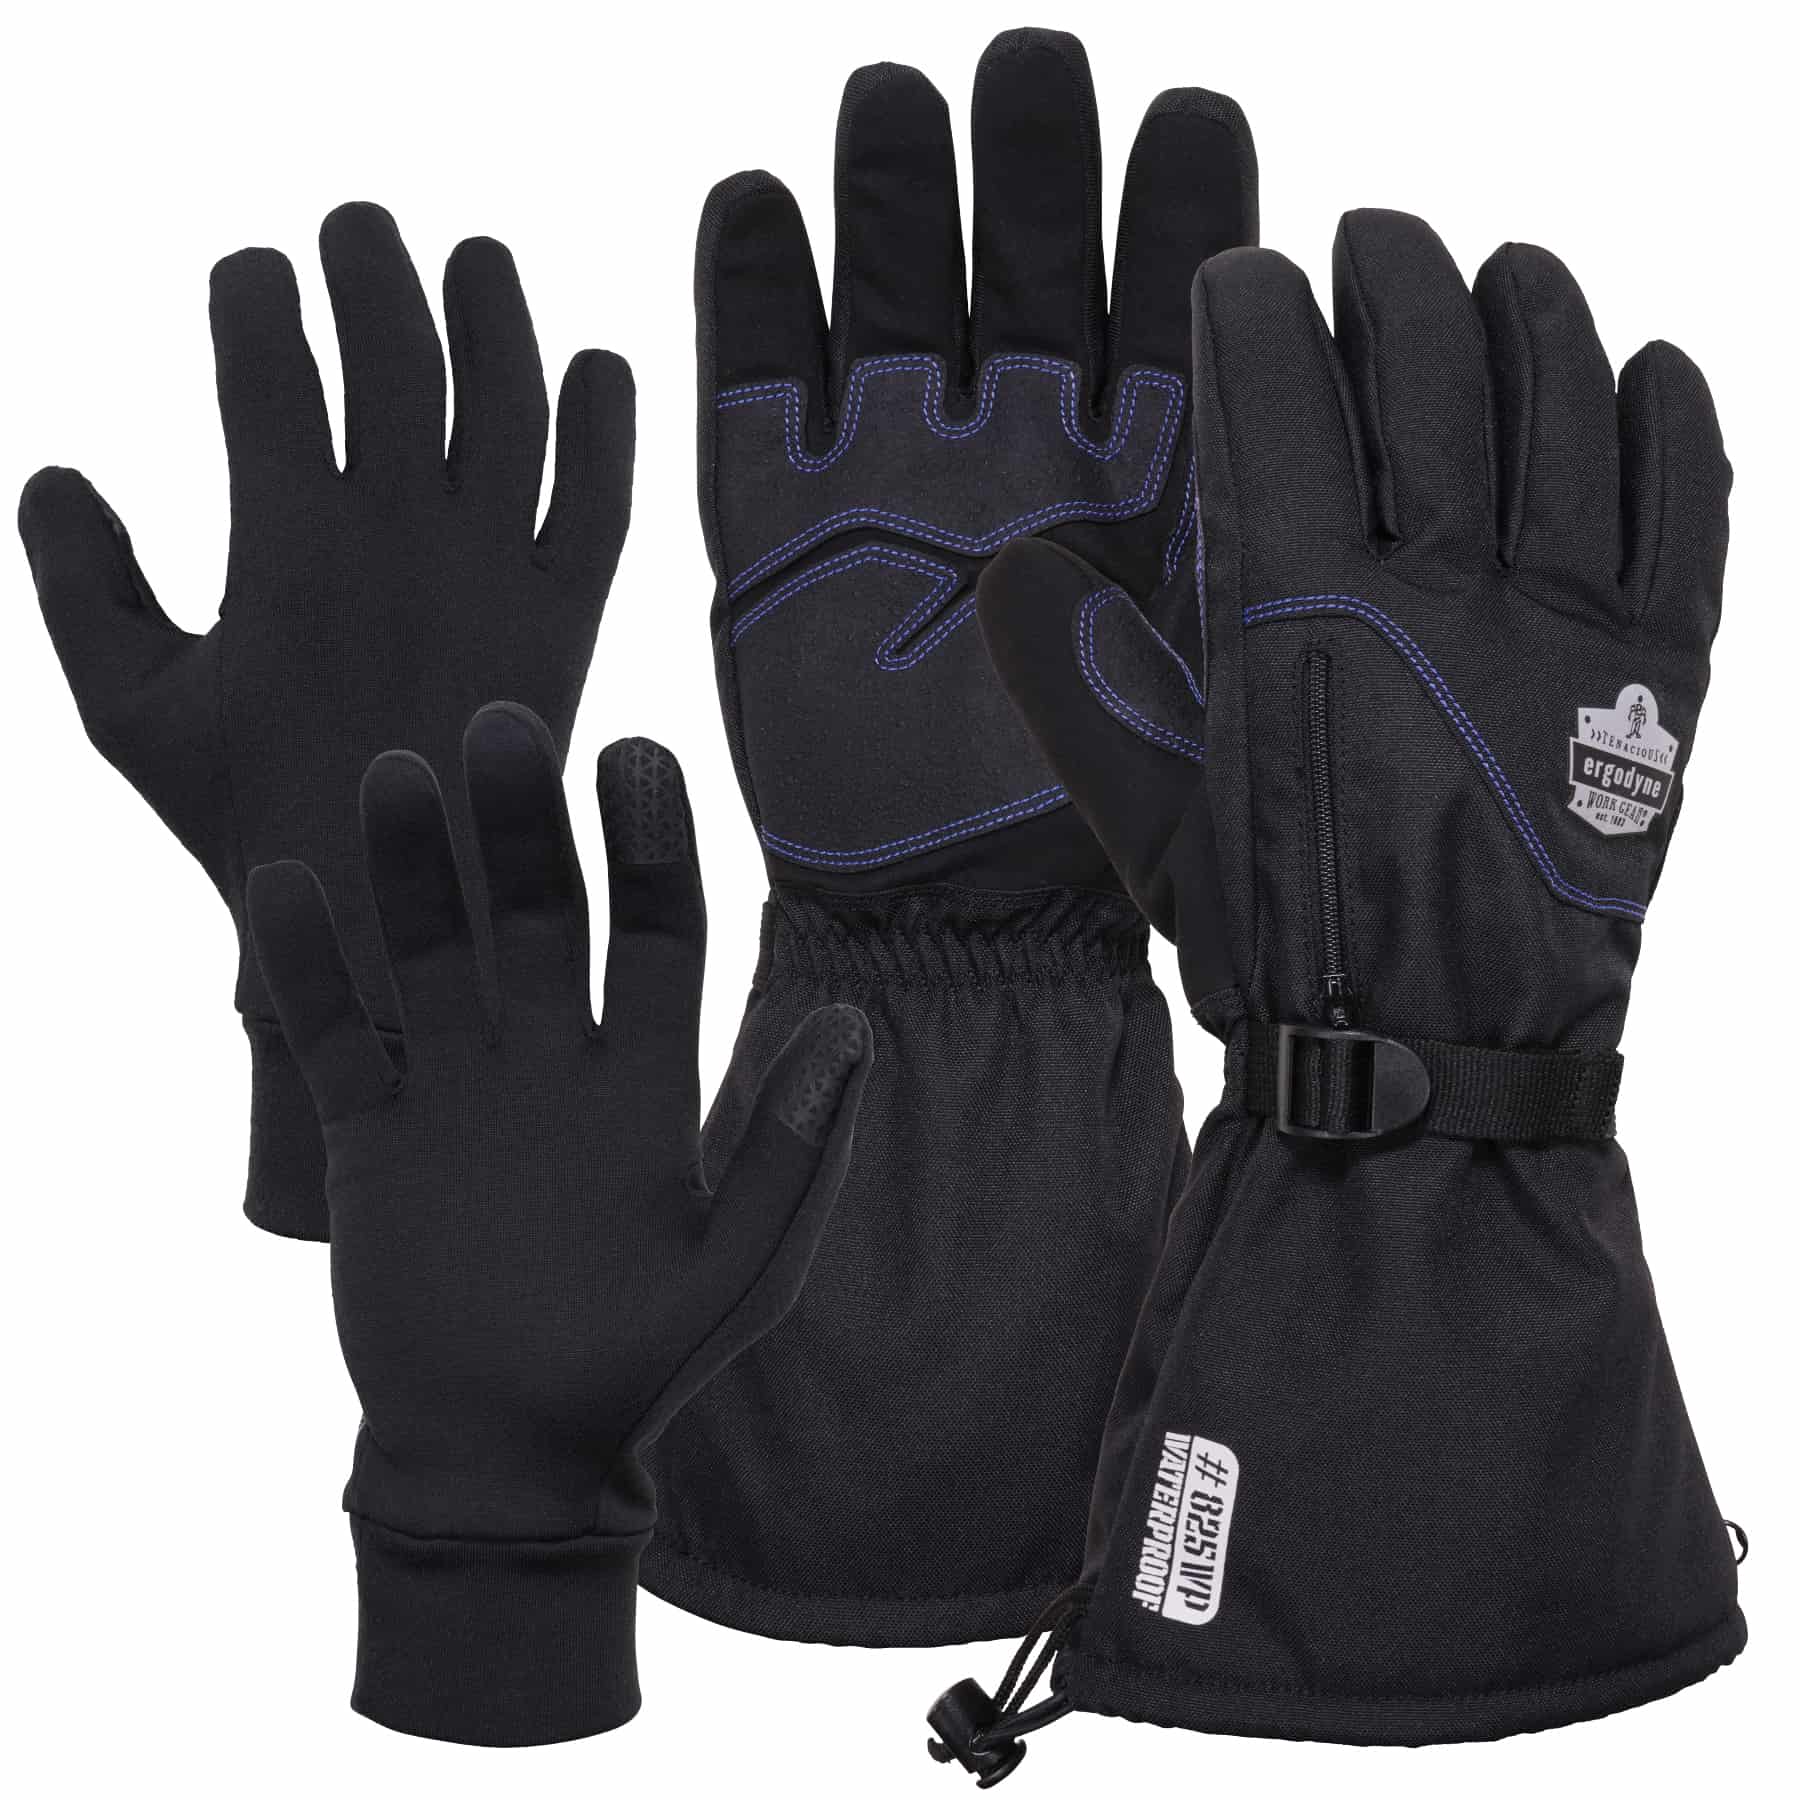 https://www.ergodyne.com/sites/default/files/product-images/17602-825wp-thermal-waterproof-winter-work-gloves-black-all-pieces.jpg